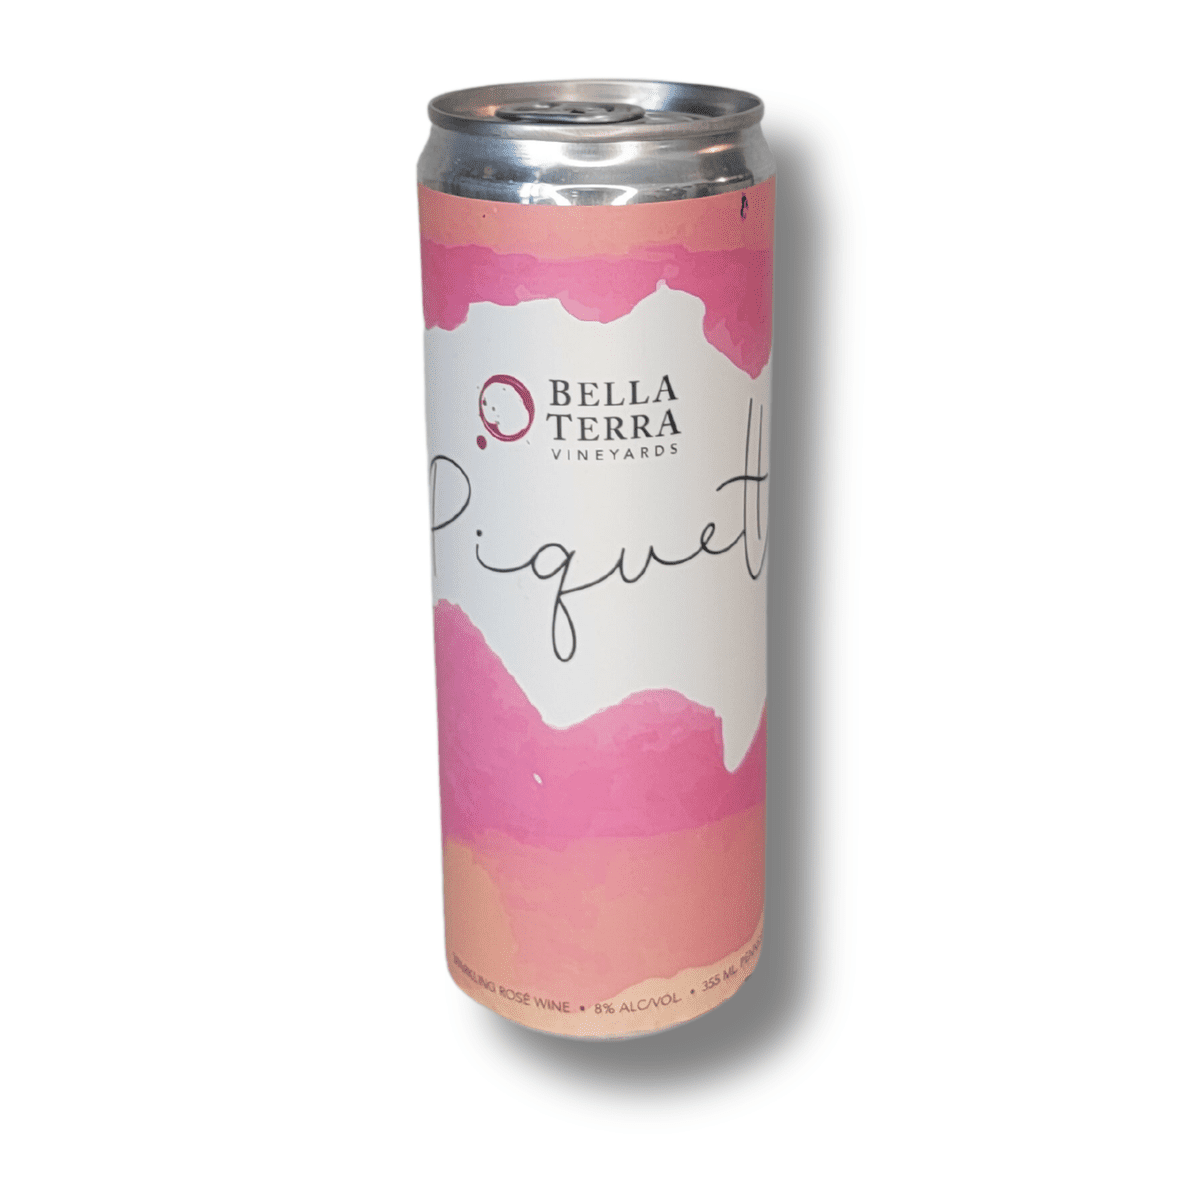 Bella Terra - Piquette 4-Pack - 12oz sleek can